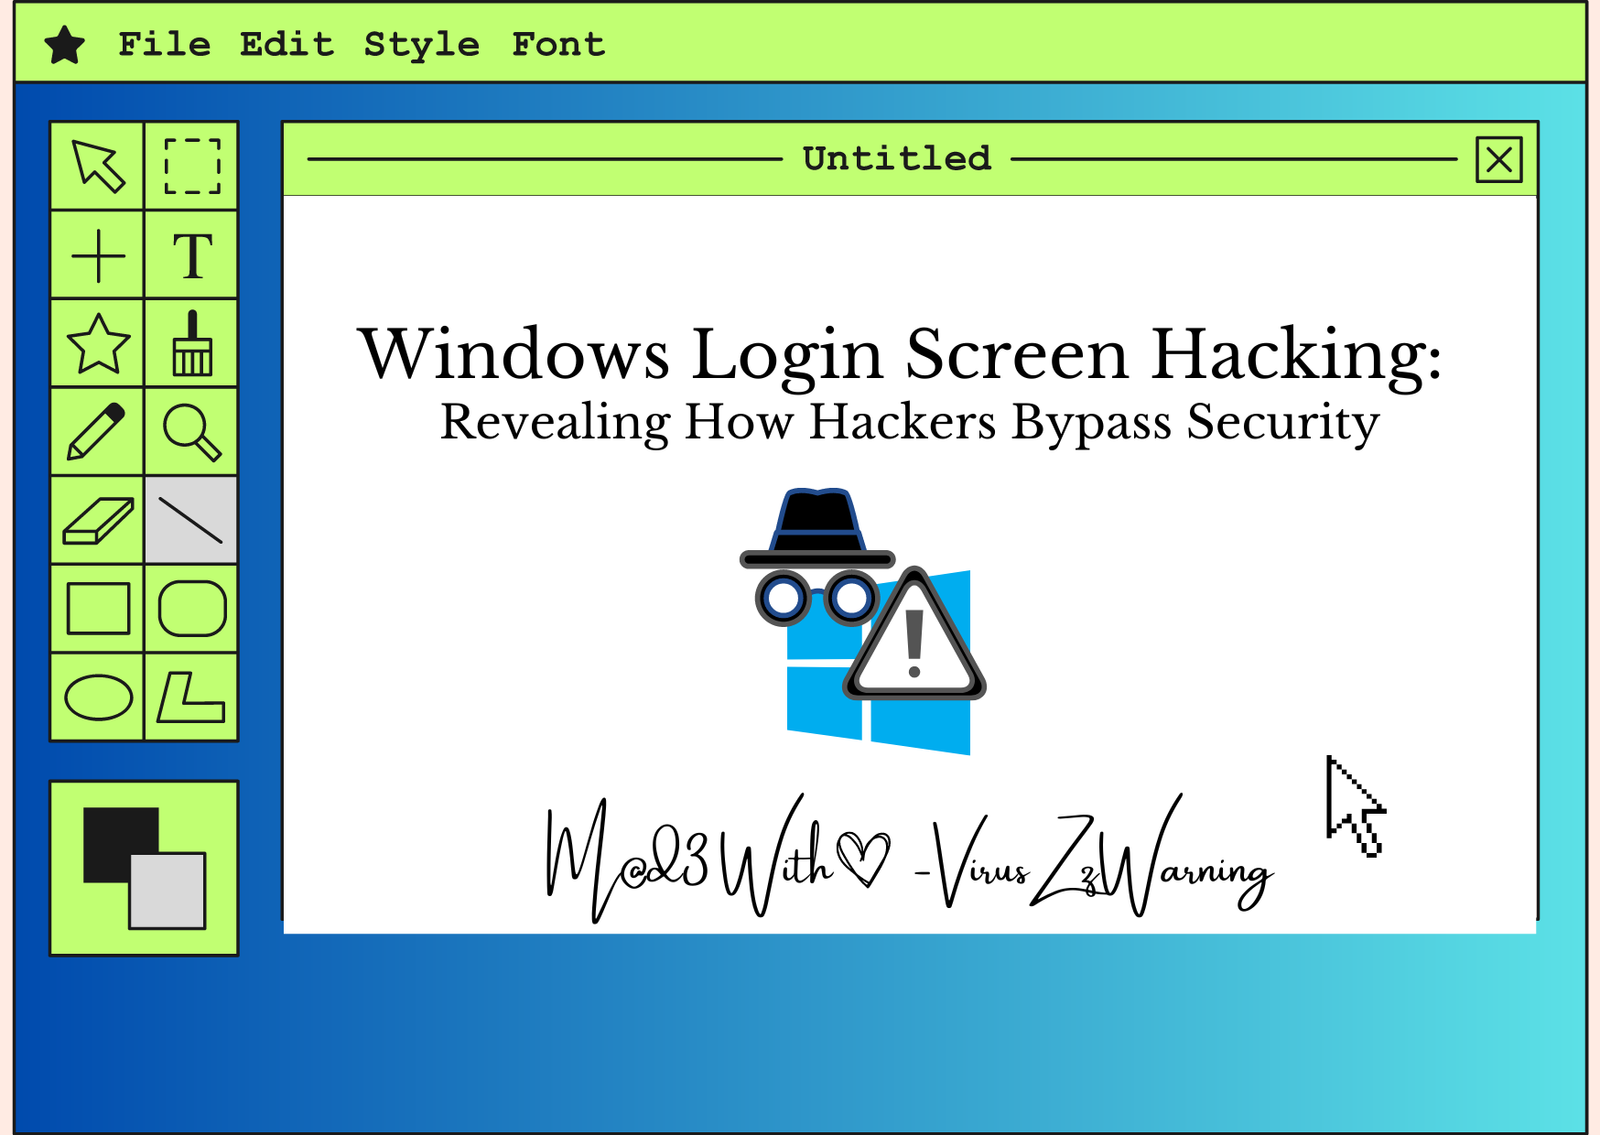 Windows Login Screen Hacking: Revealing How Hackers Bypass Security